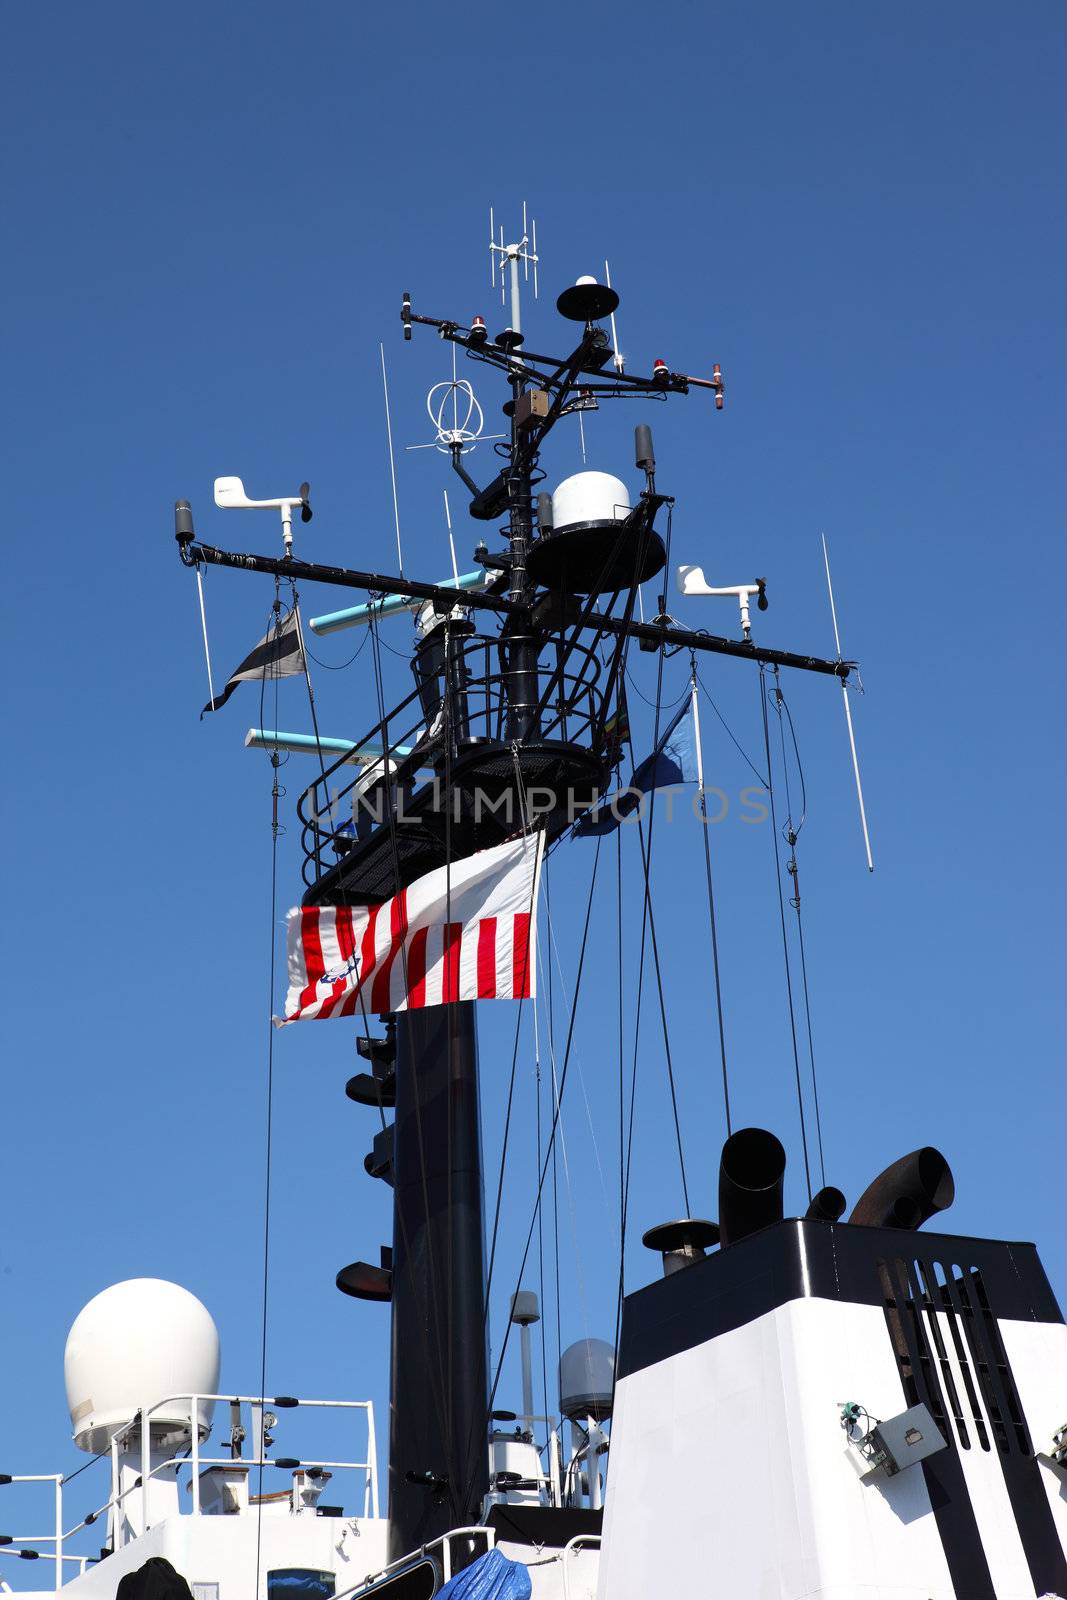 A coast guard ship mast decorated with electronics.